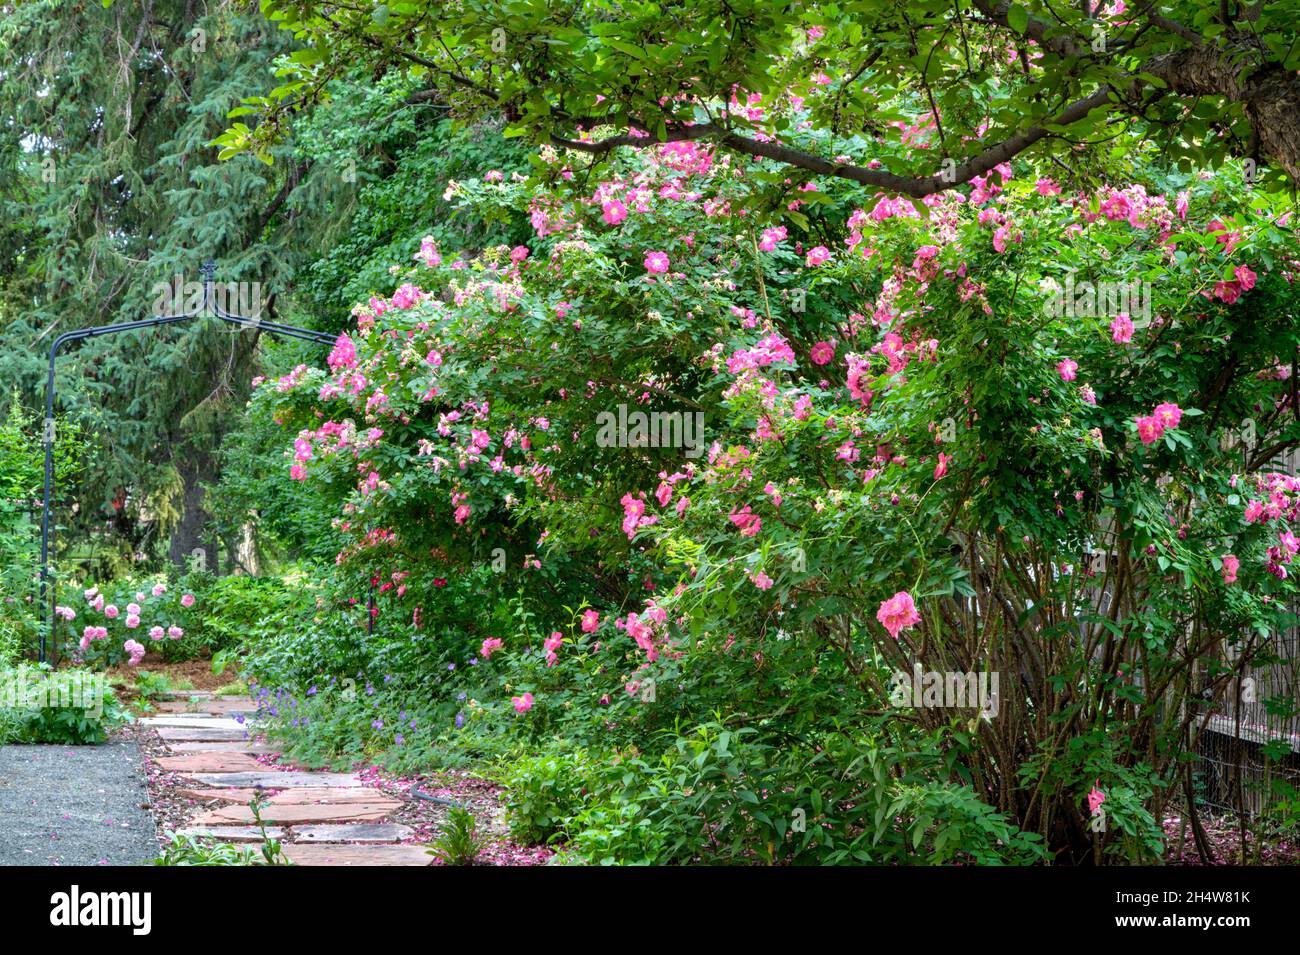 A mature shrub rose in full blossom. Stock Photo